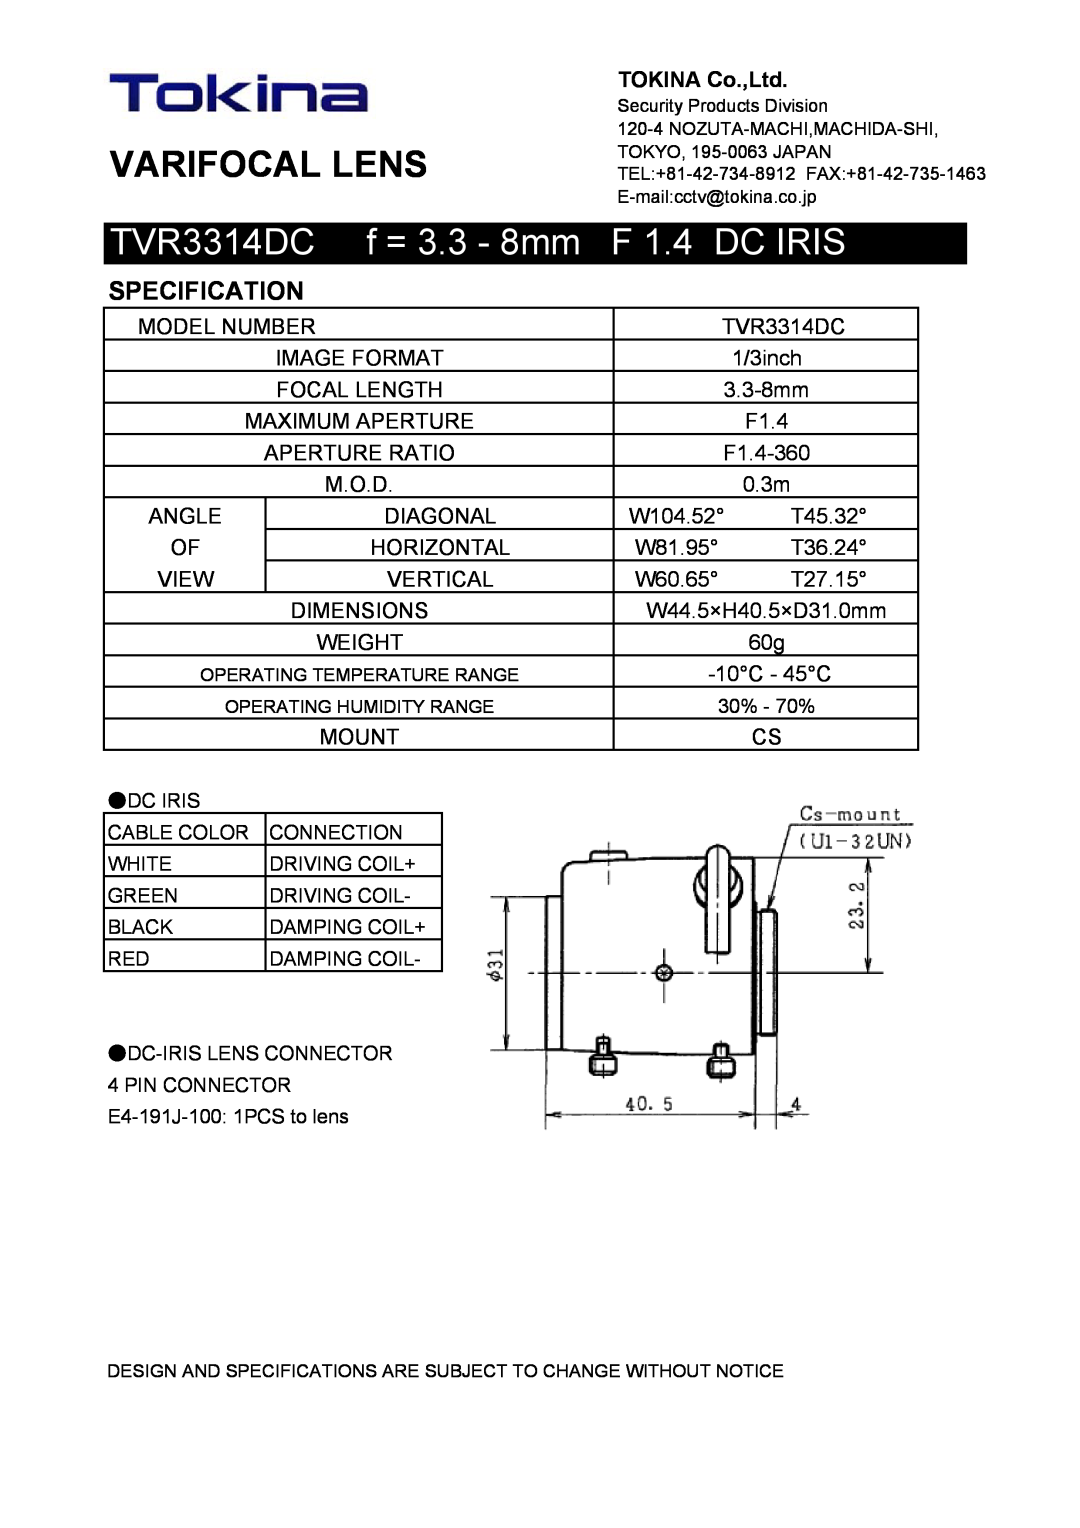 Tokina TVR3314DC manual Varifocal Lens, f = 3.3 - 8mm, F 1.4 DC IRIS, Specification 